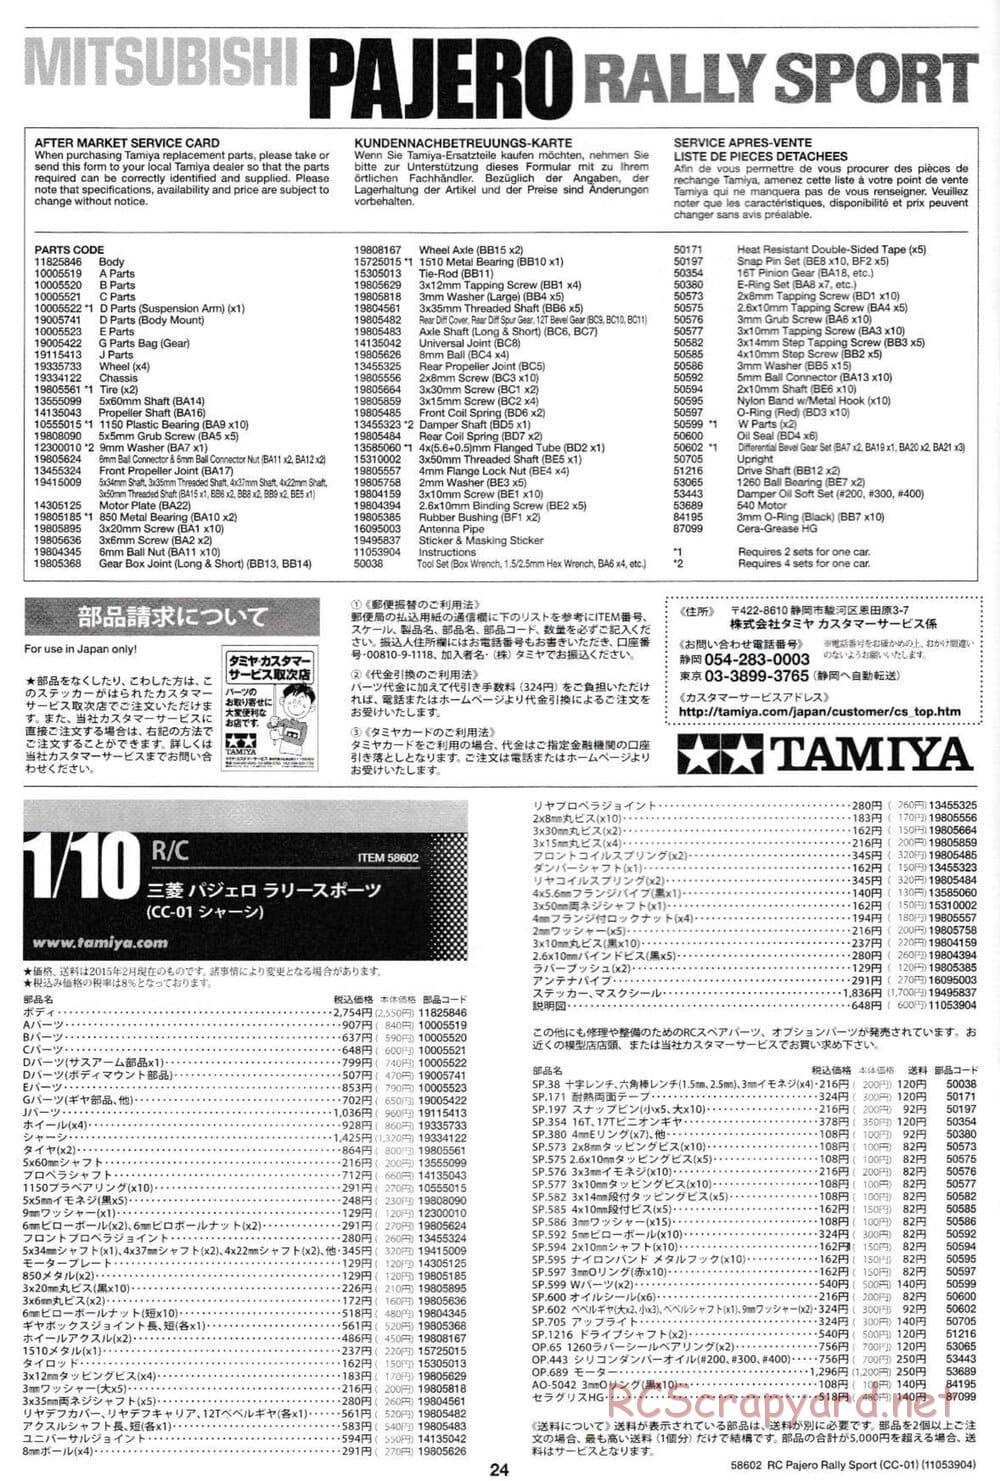 Tamiya - Mitsubishi Pajero Rally Sport - CC-01 Chassis - Manual - Page 24